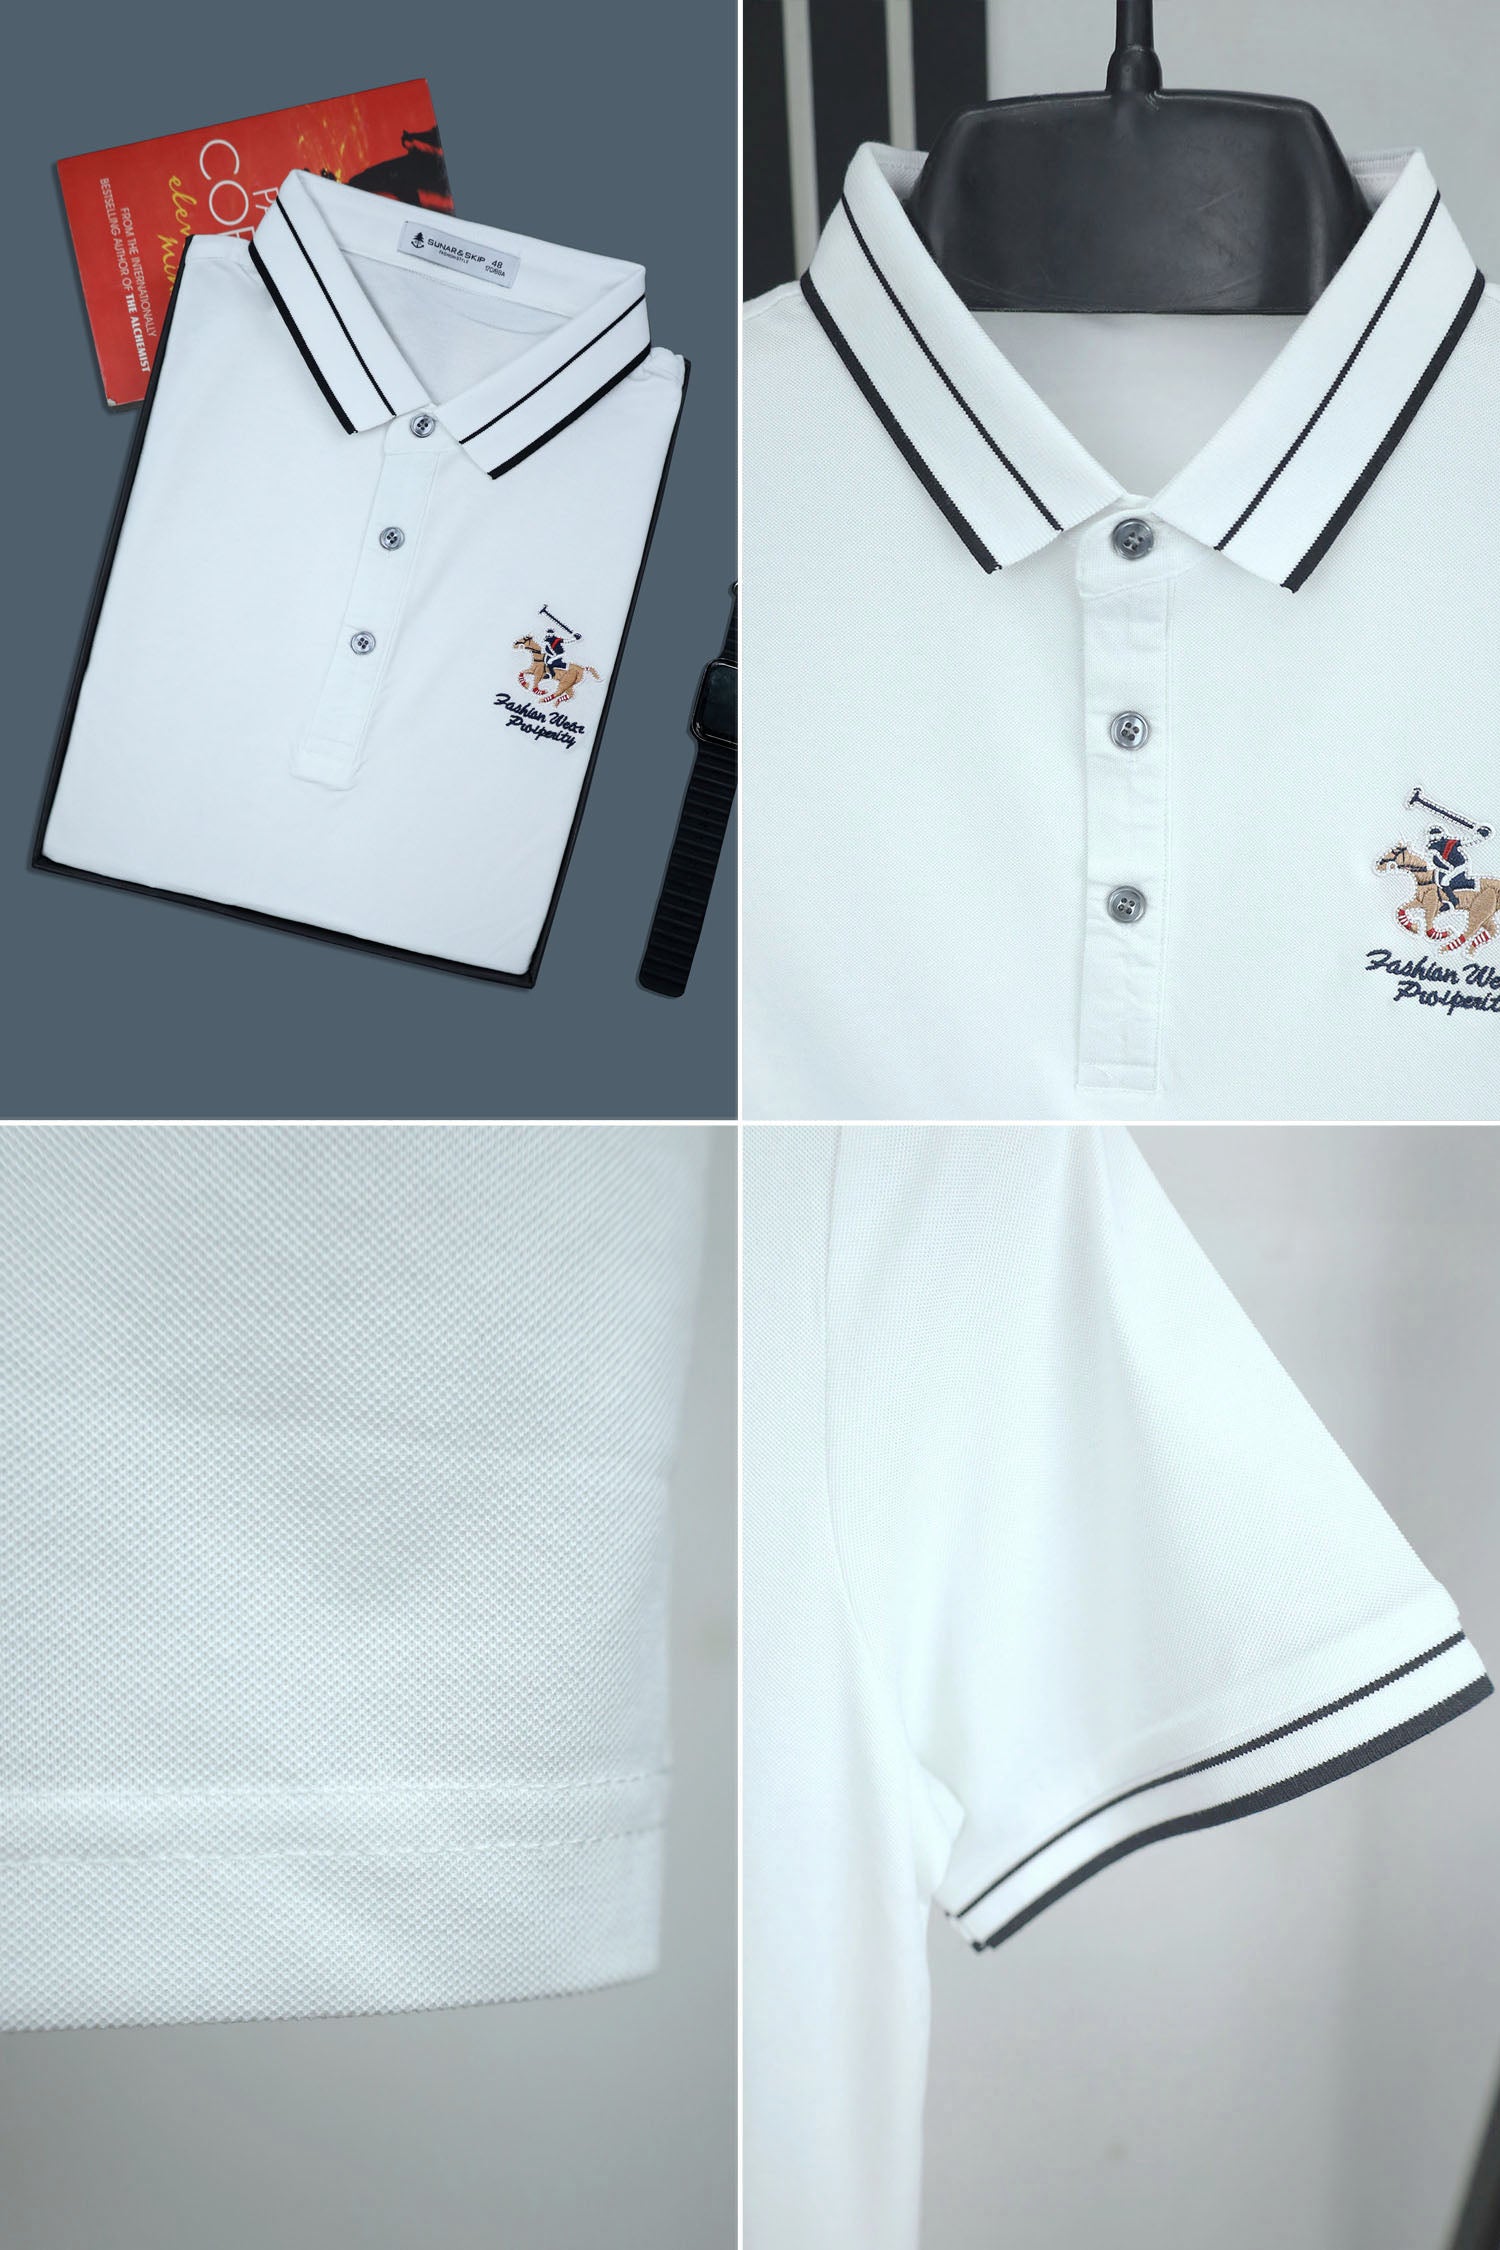 Ralp Lurn Front Logo Men Polo Shirts